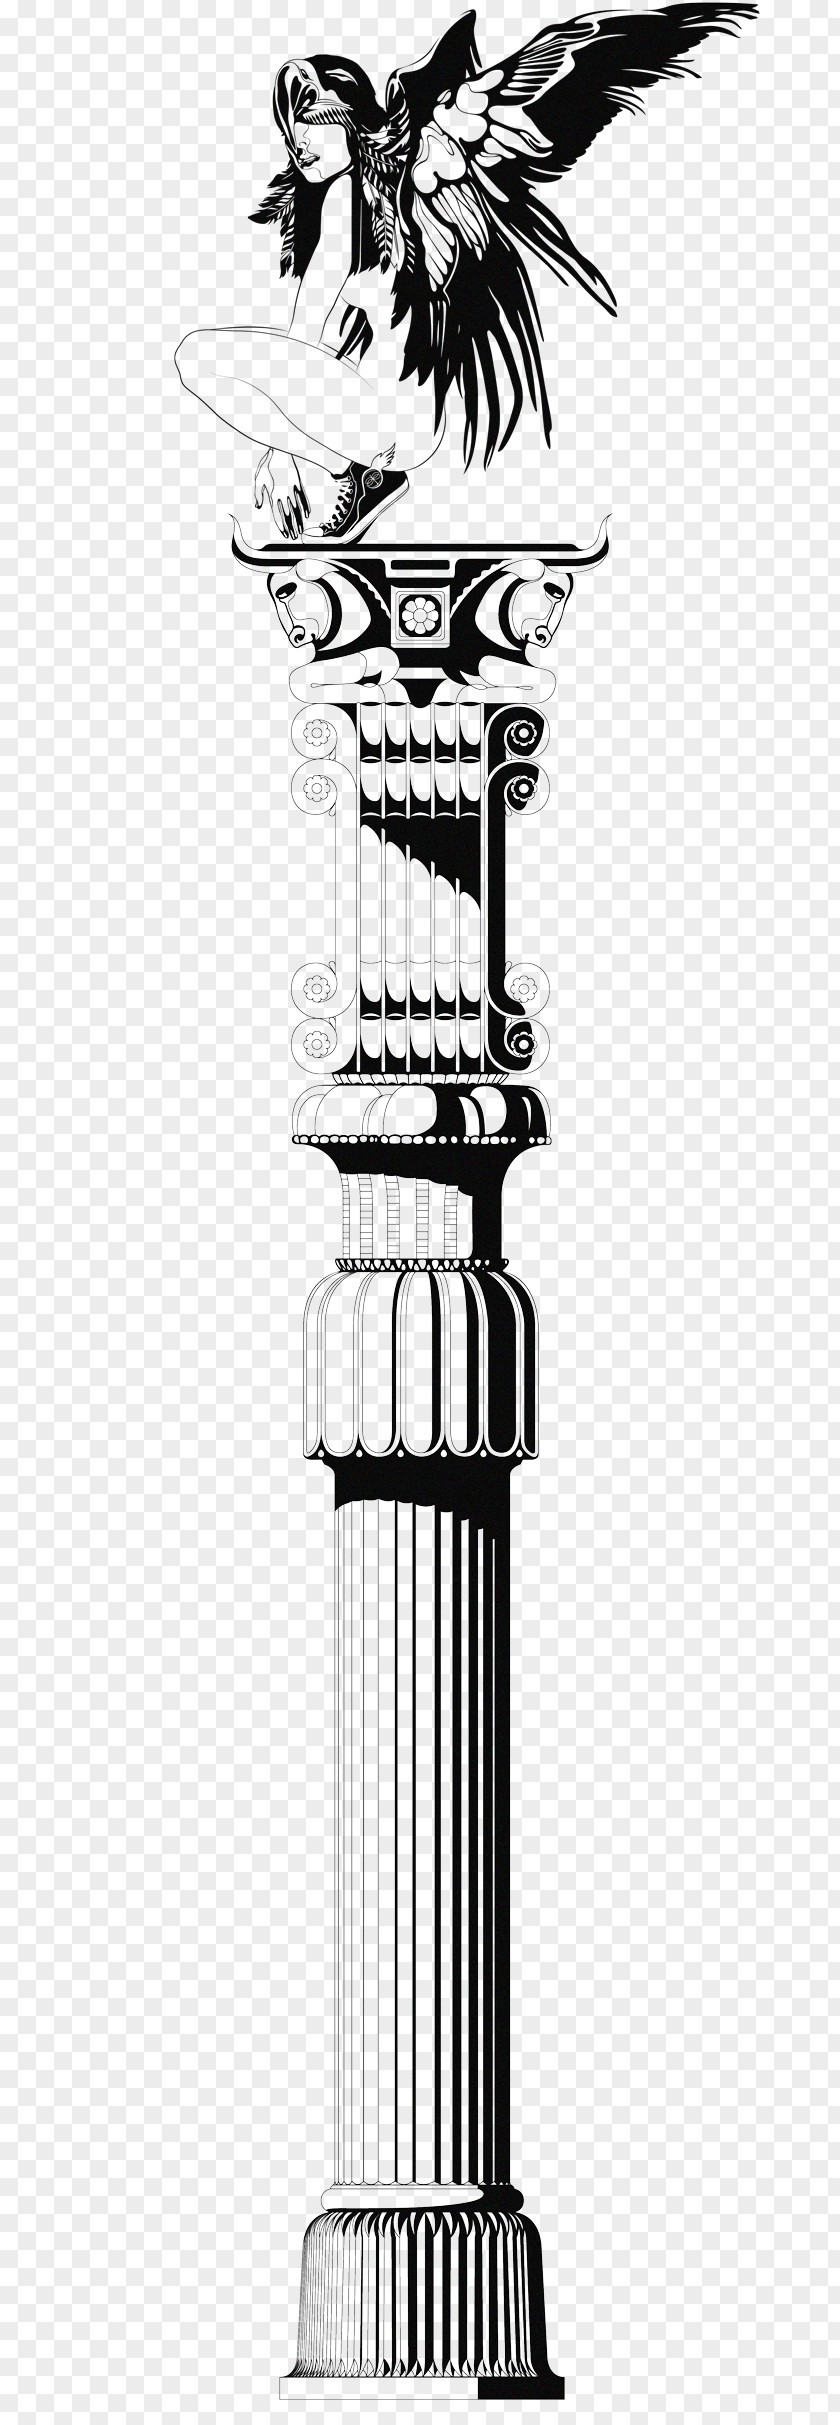 Persepolis Column Portfoolio Black And White Illustration PNG